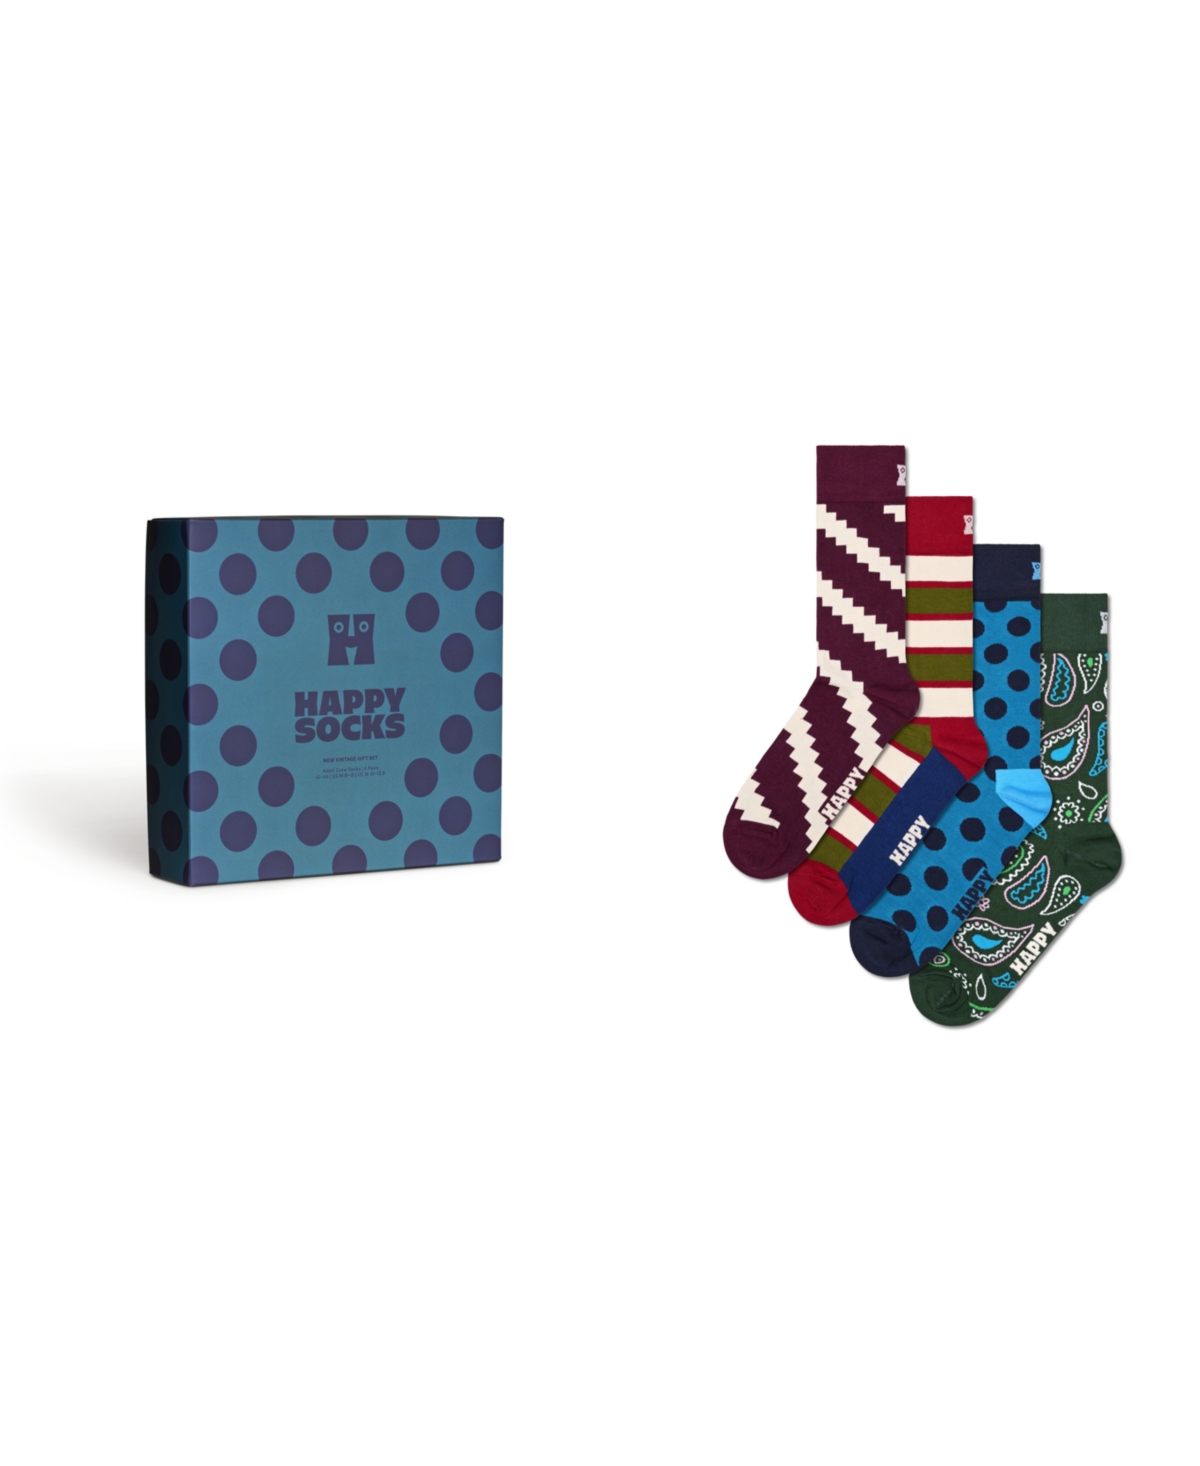 New Vintage-Like Socks Gift Set, Pack of 4 - Multi